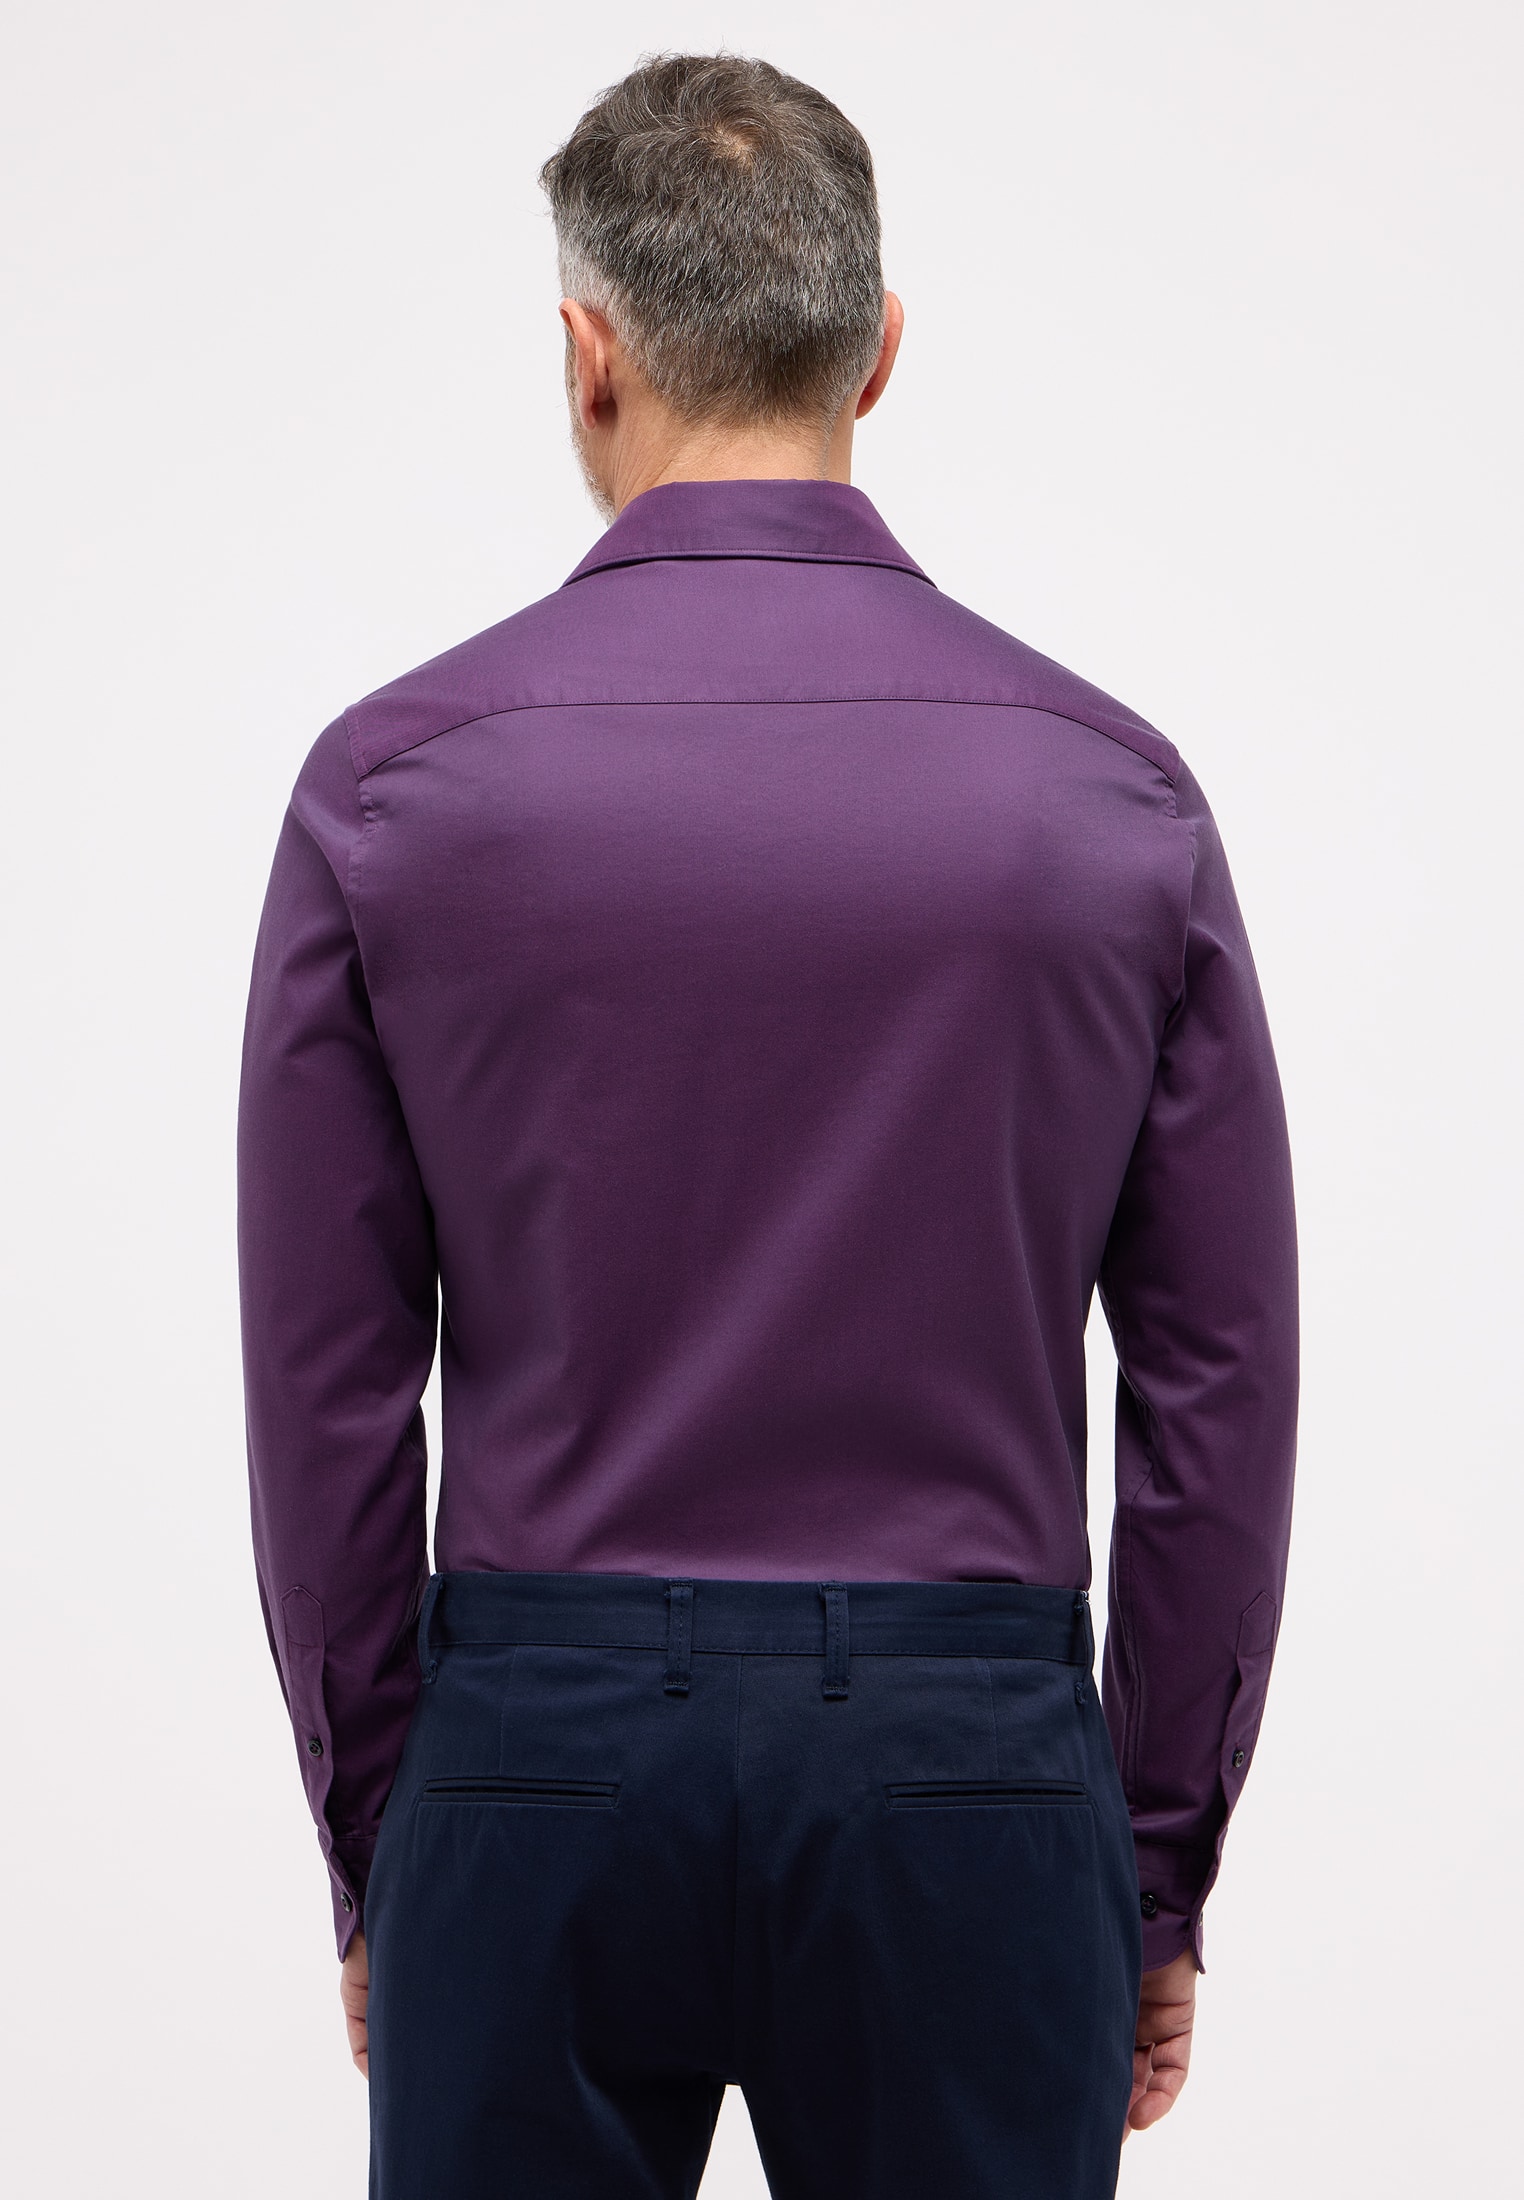 SLIM FIT Soft Langarm burgunder | burgunder Shirt 38 unifarben in | | | Luxury 1SH03482-05-81-38-1/1